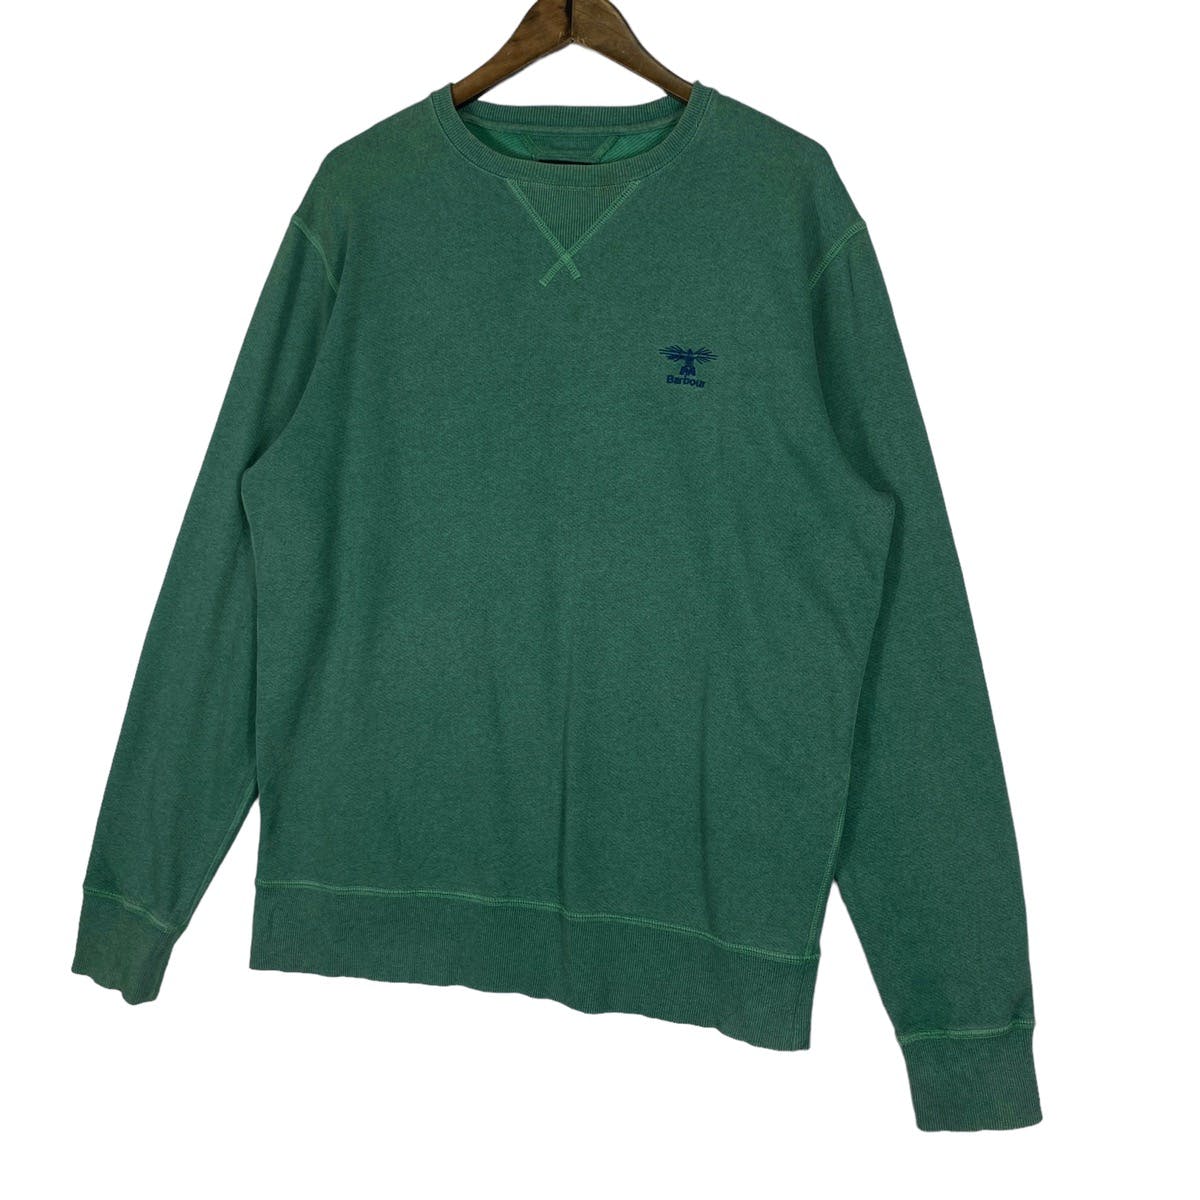 Vintage Barbour Sweatshirt Crewneck Made In Portugal - 3